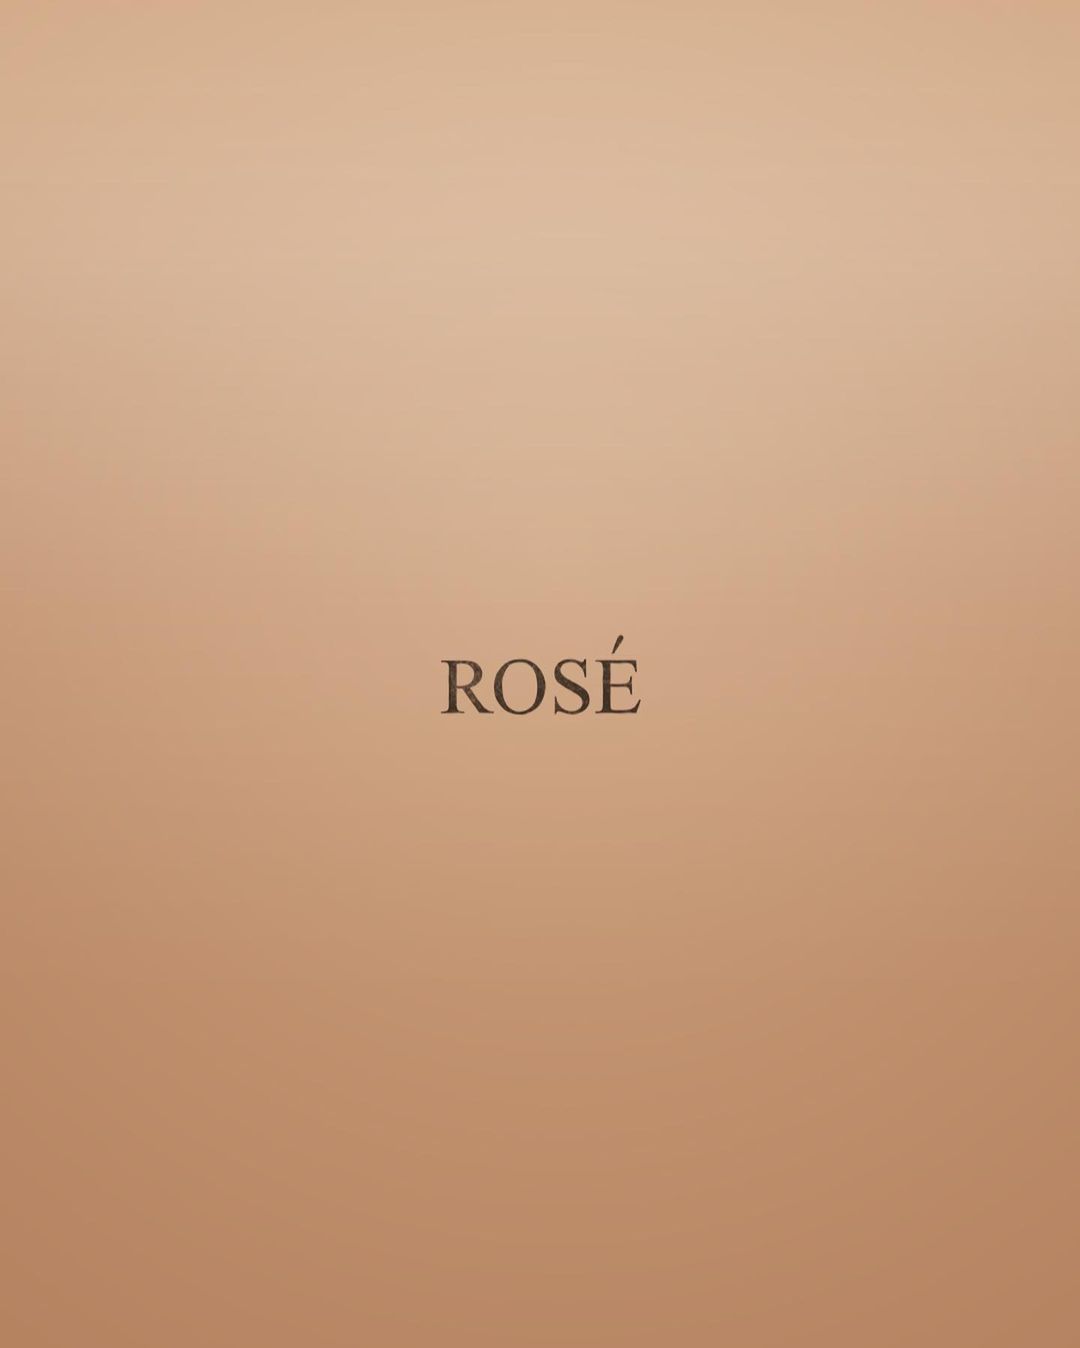 #ROSÉ #로제 #BLACKPINK #블랙핑크 #FirstSingleAlbum #R #Gone #MV #April4th_11amEST #Apr…